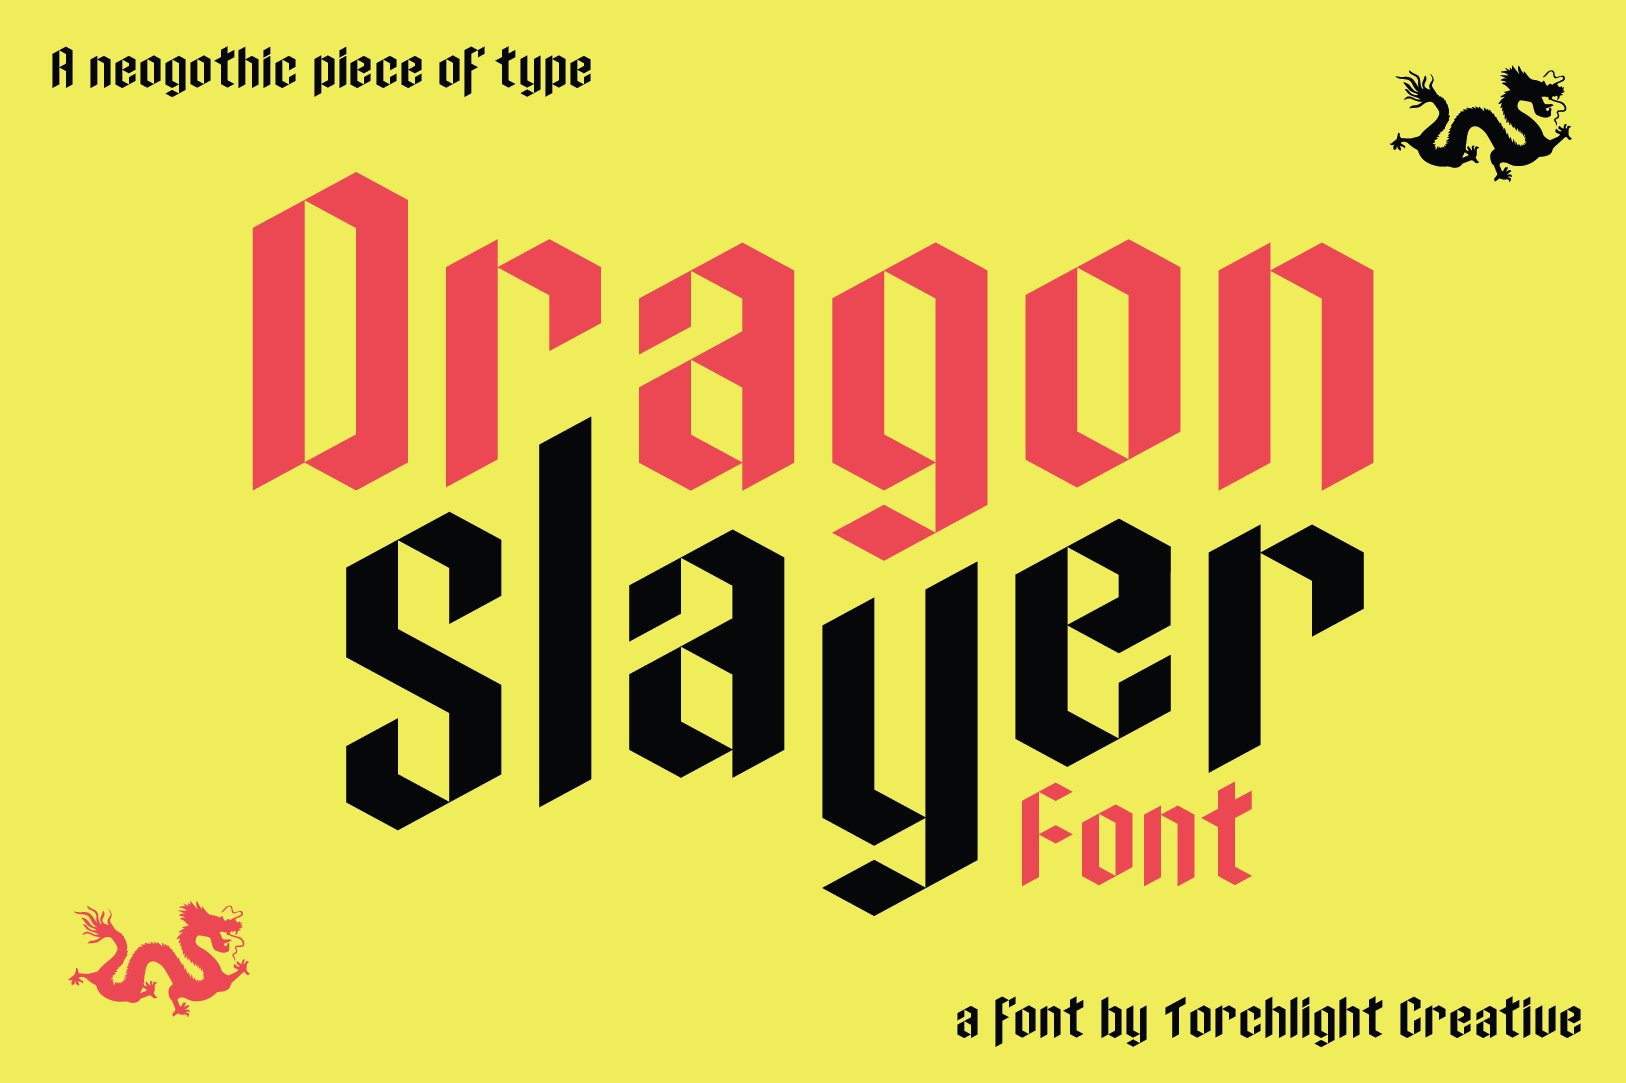 Dragon Slayer Font cover image.